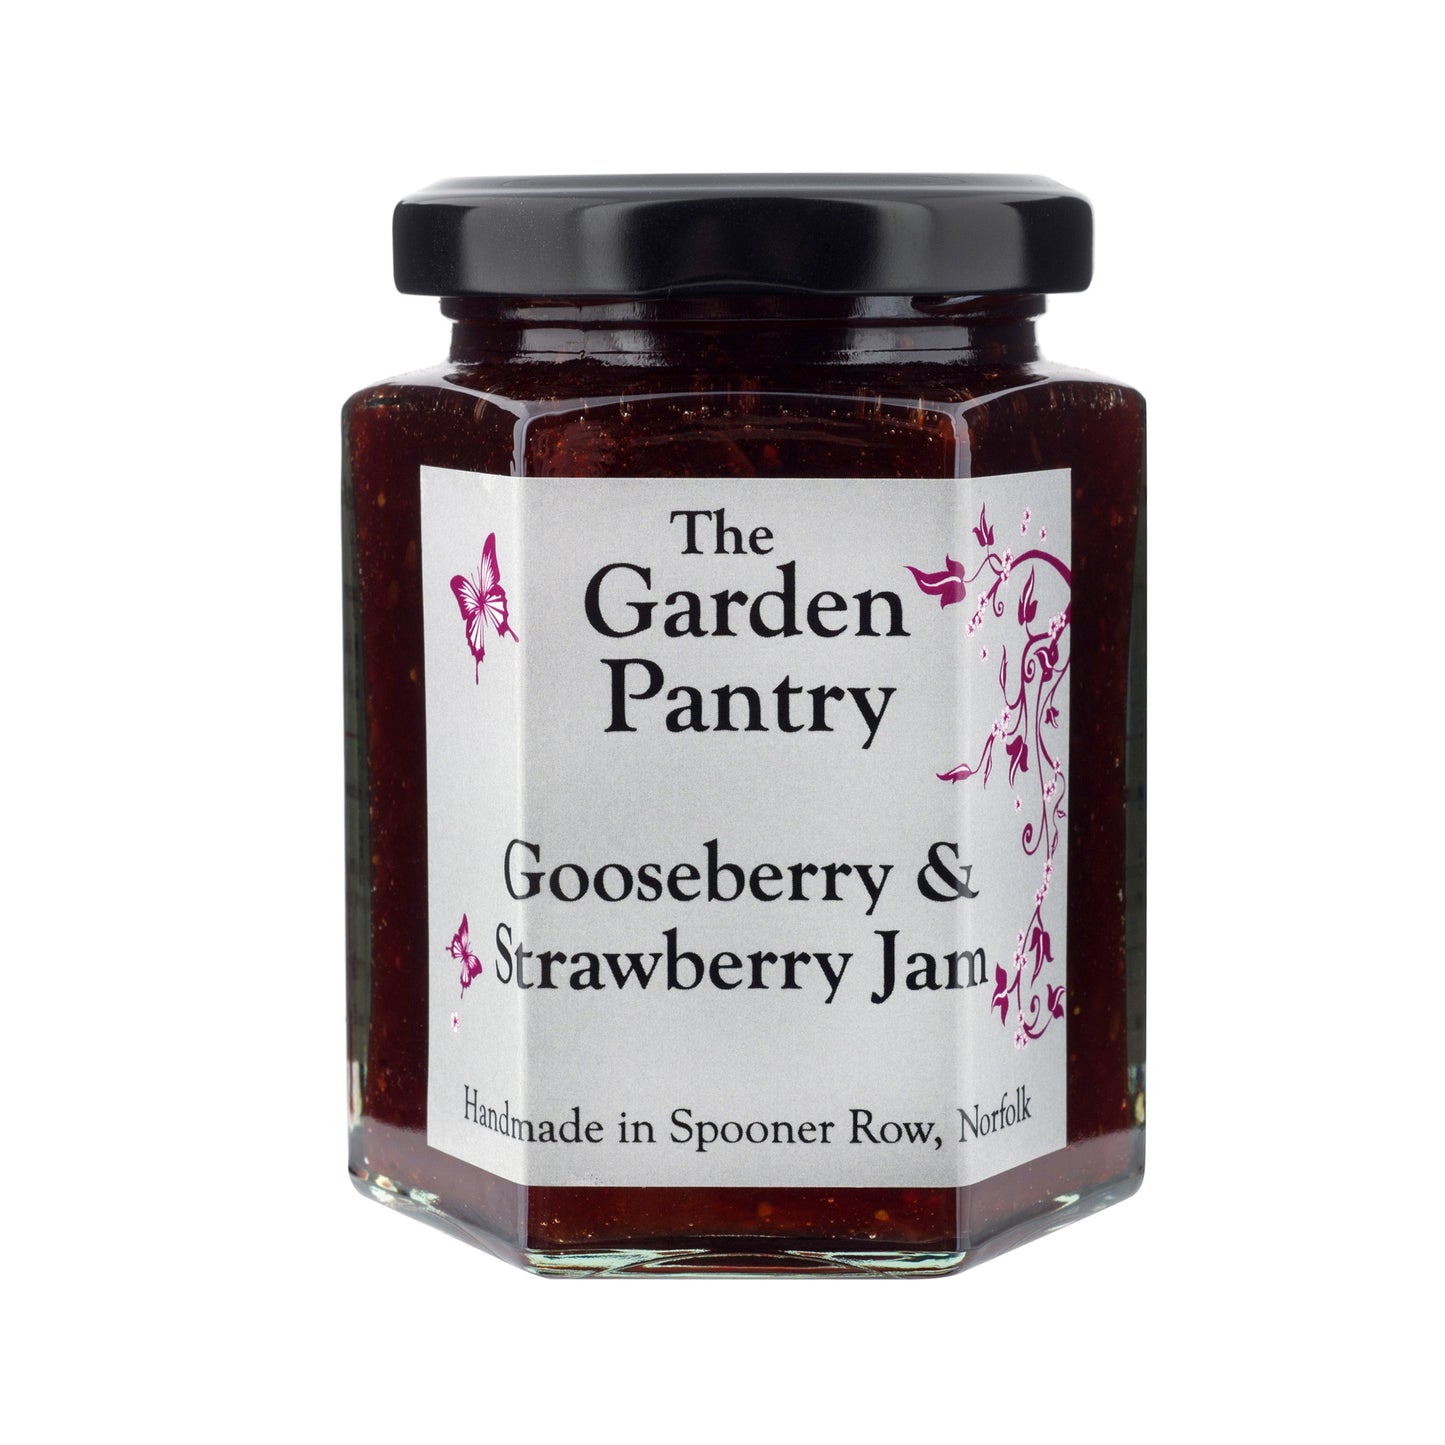 The Garden Pantry Gooseberry & Strawberry Jam